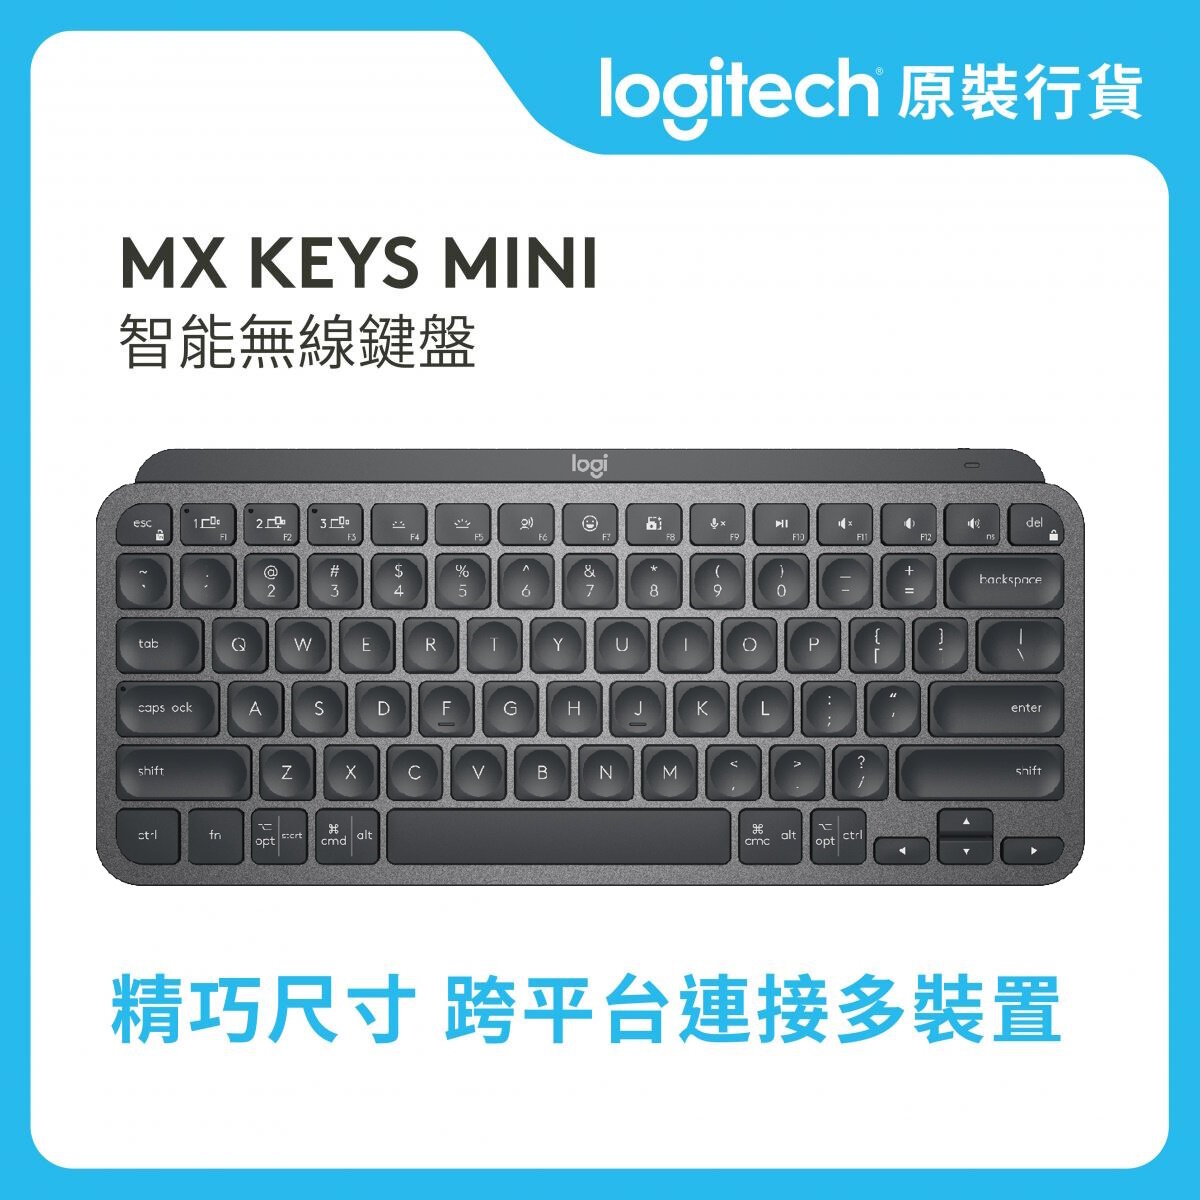 Master 系列 - MX Keys Mini 智能無線鍵盤